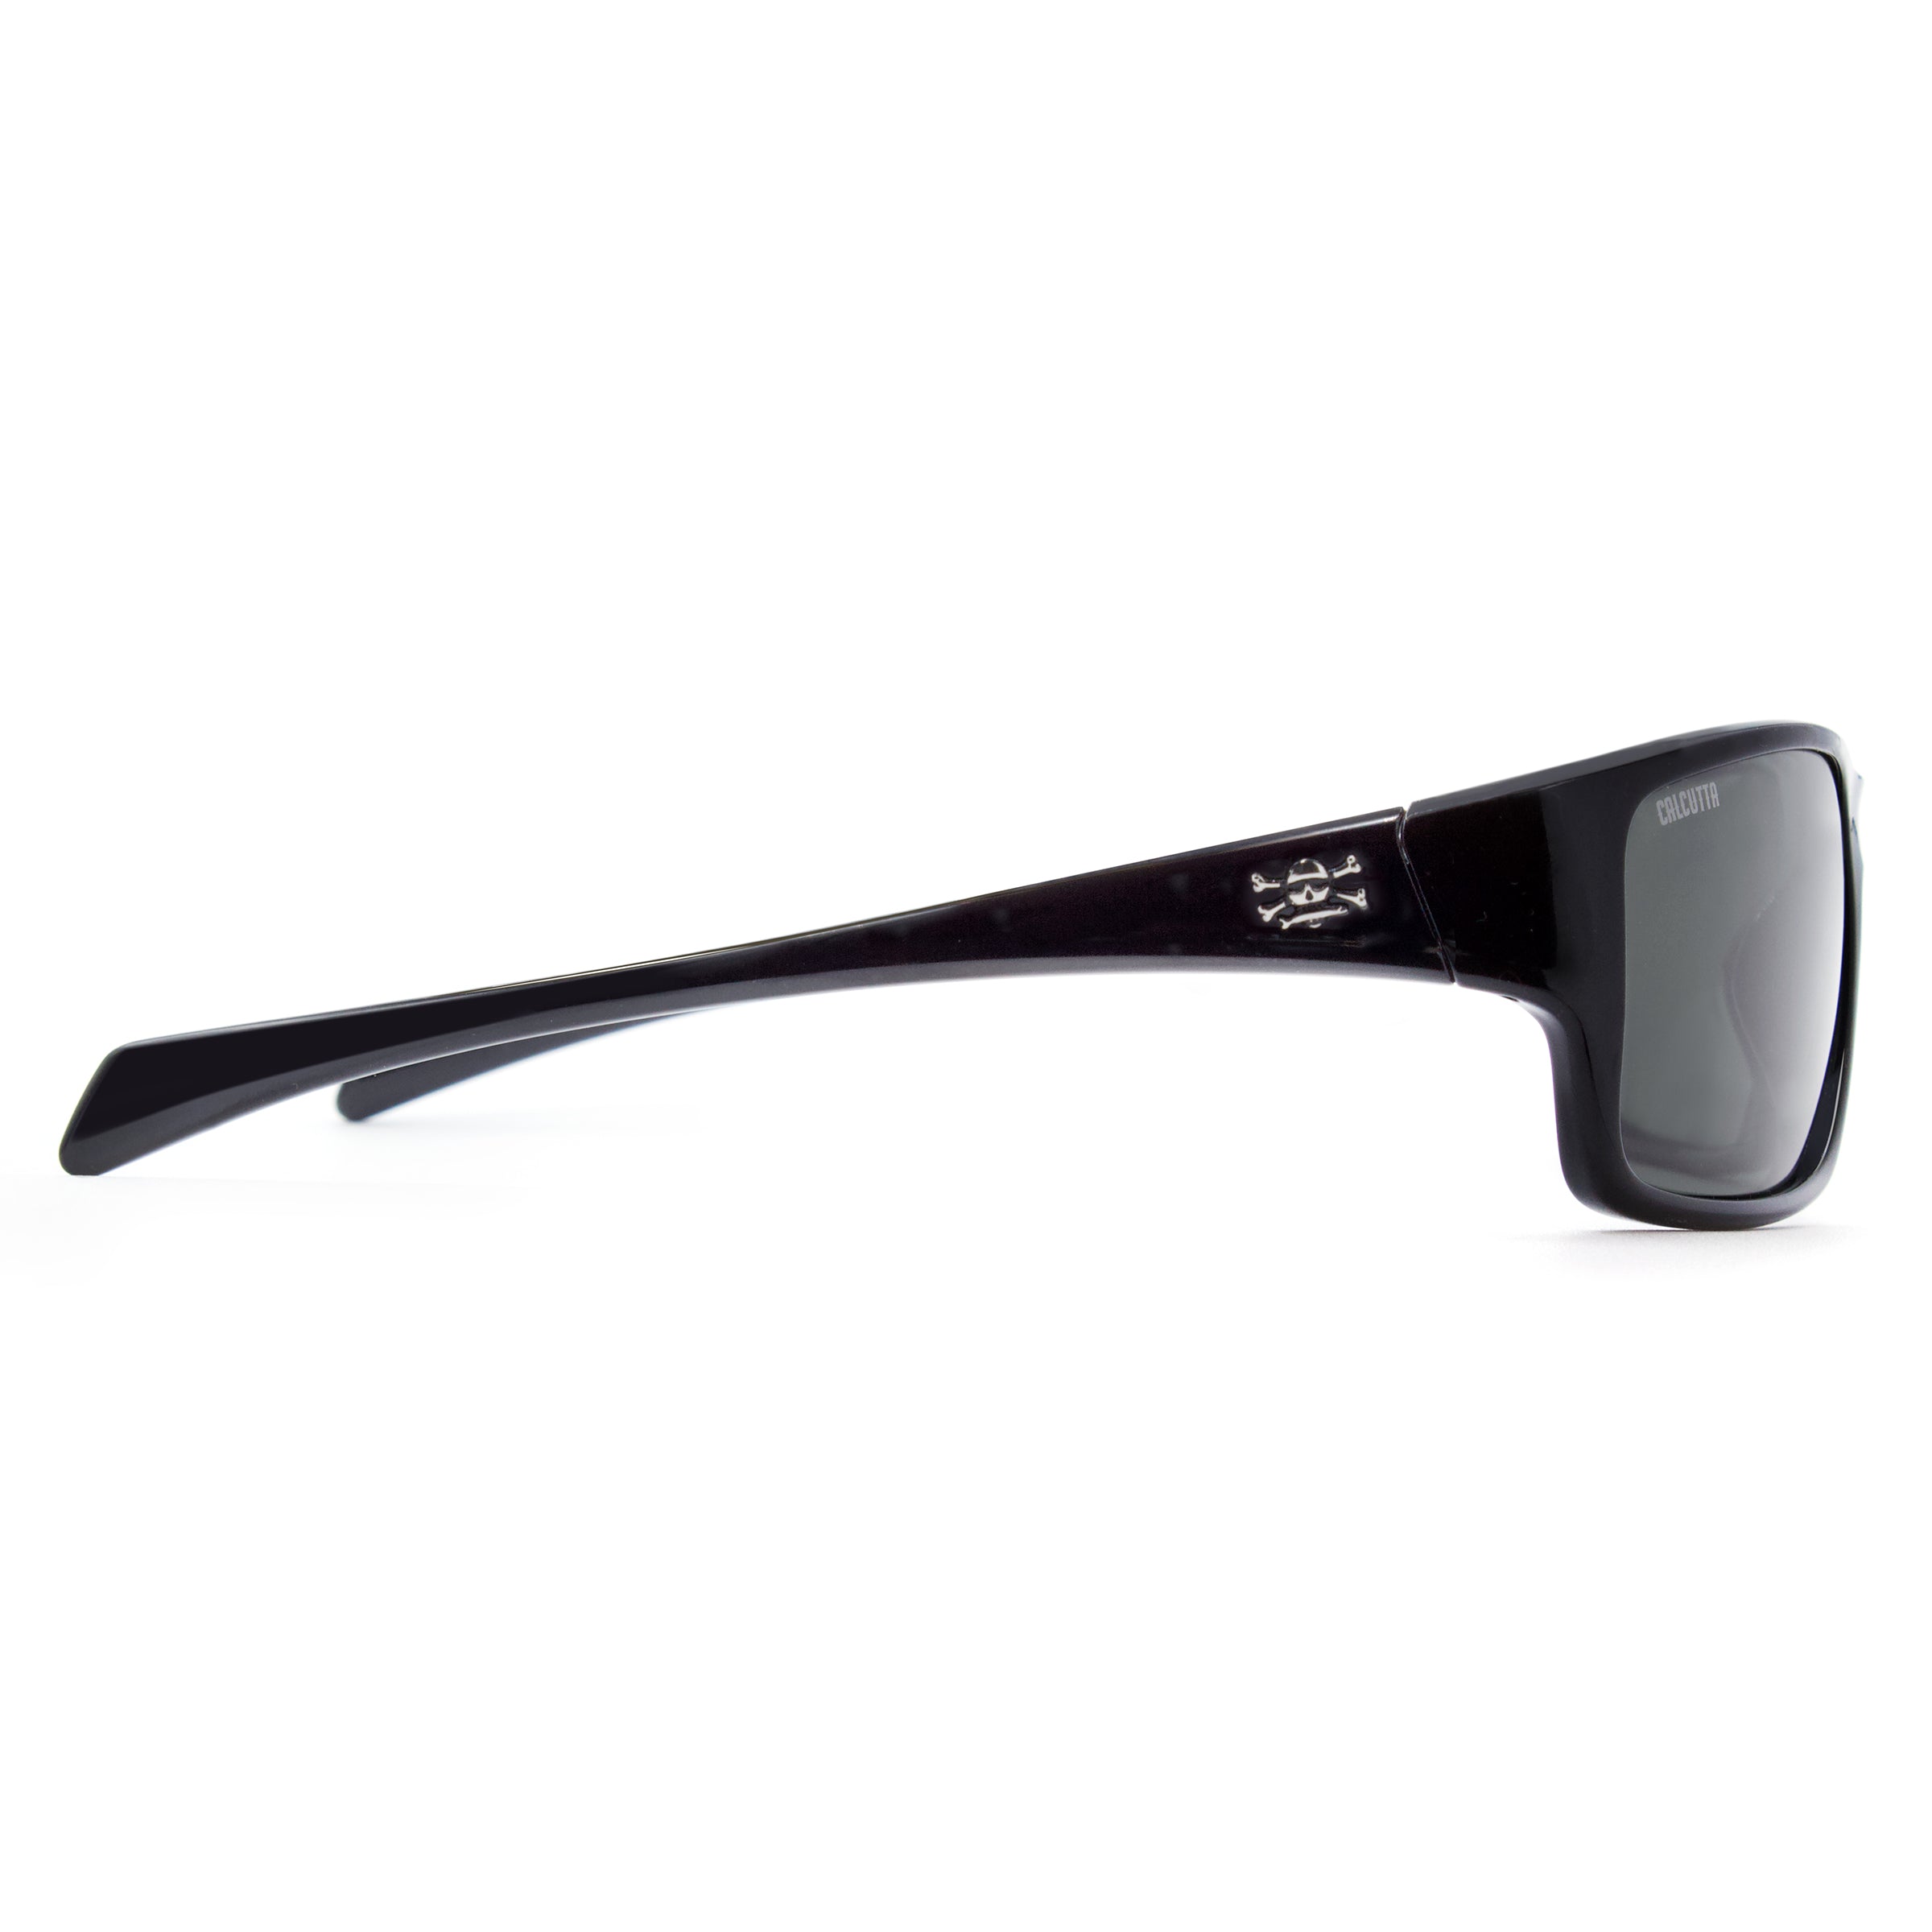 Calcutta Chesapeake sunglasses gray lens side